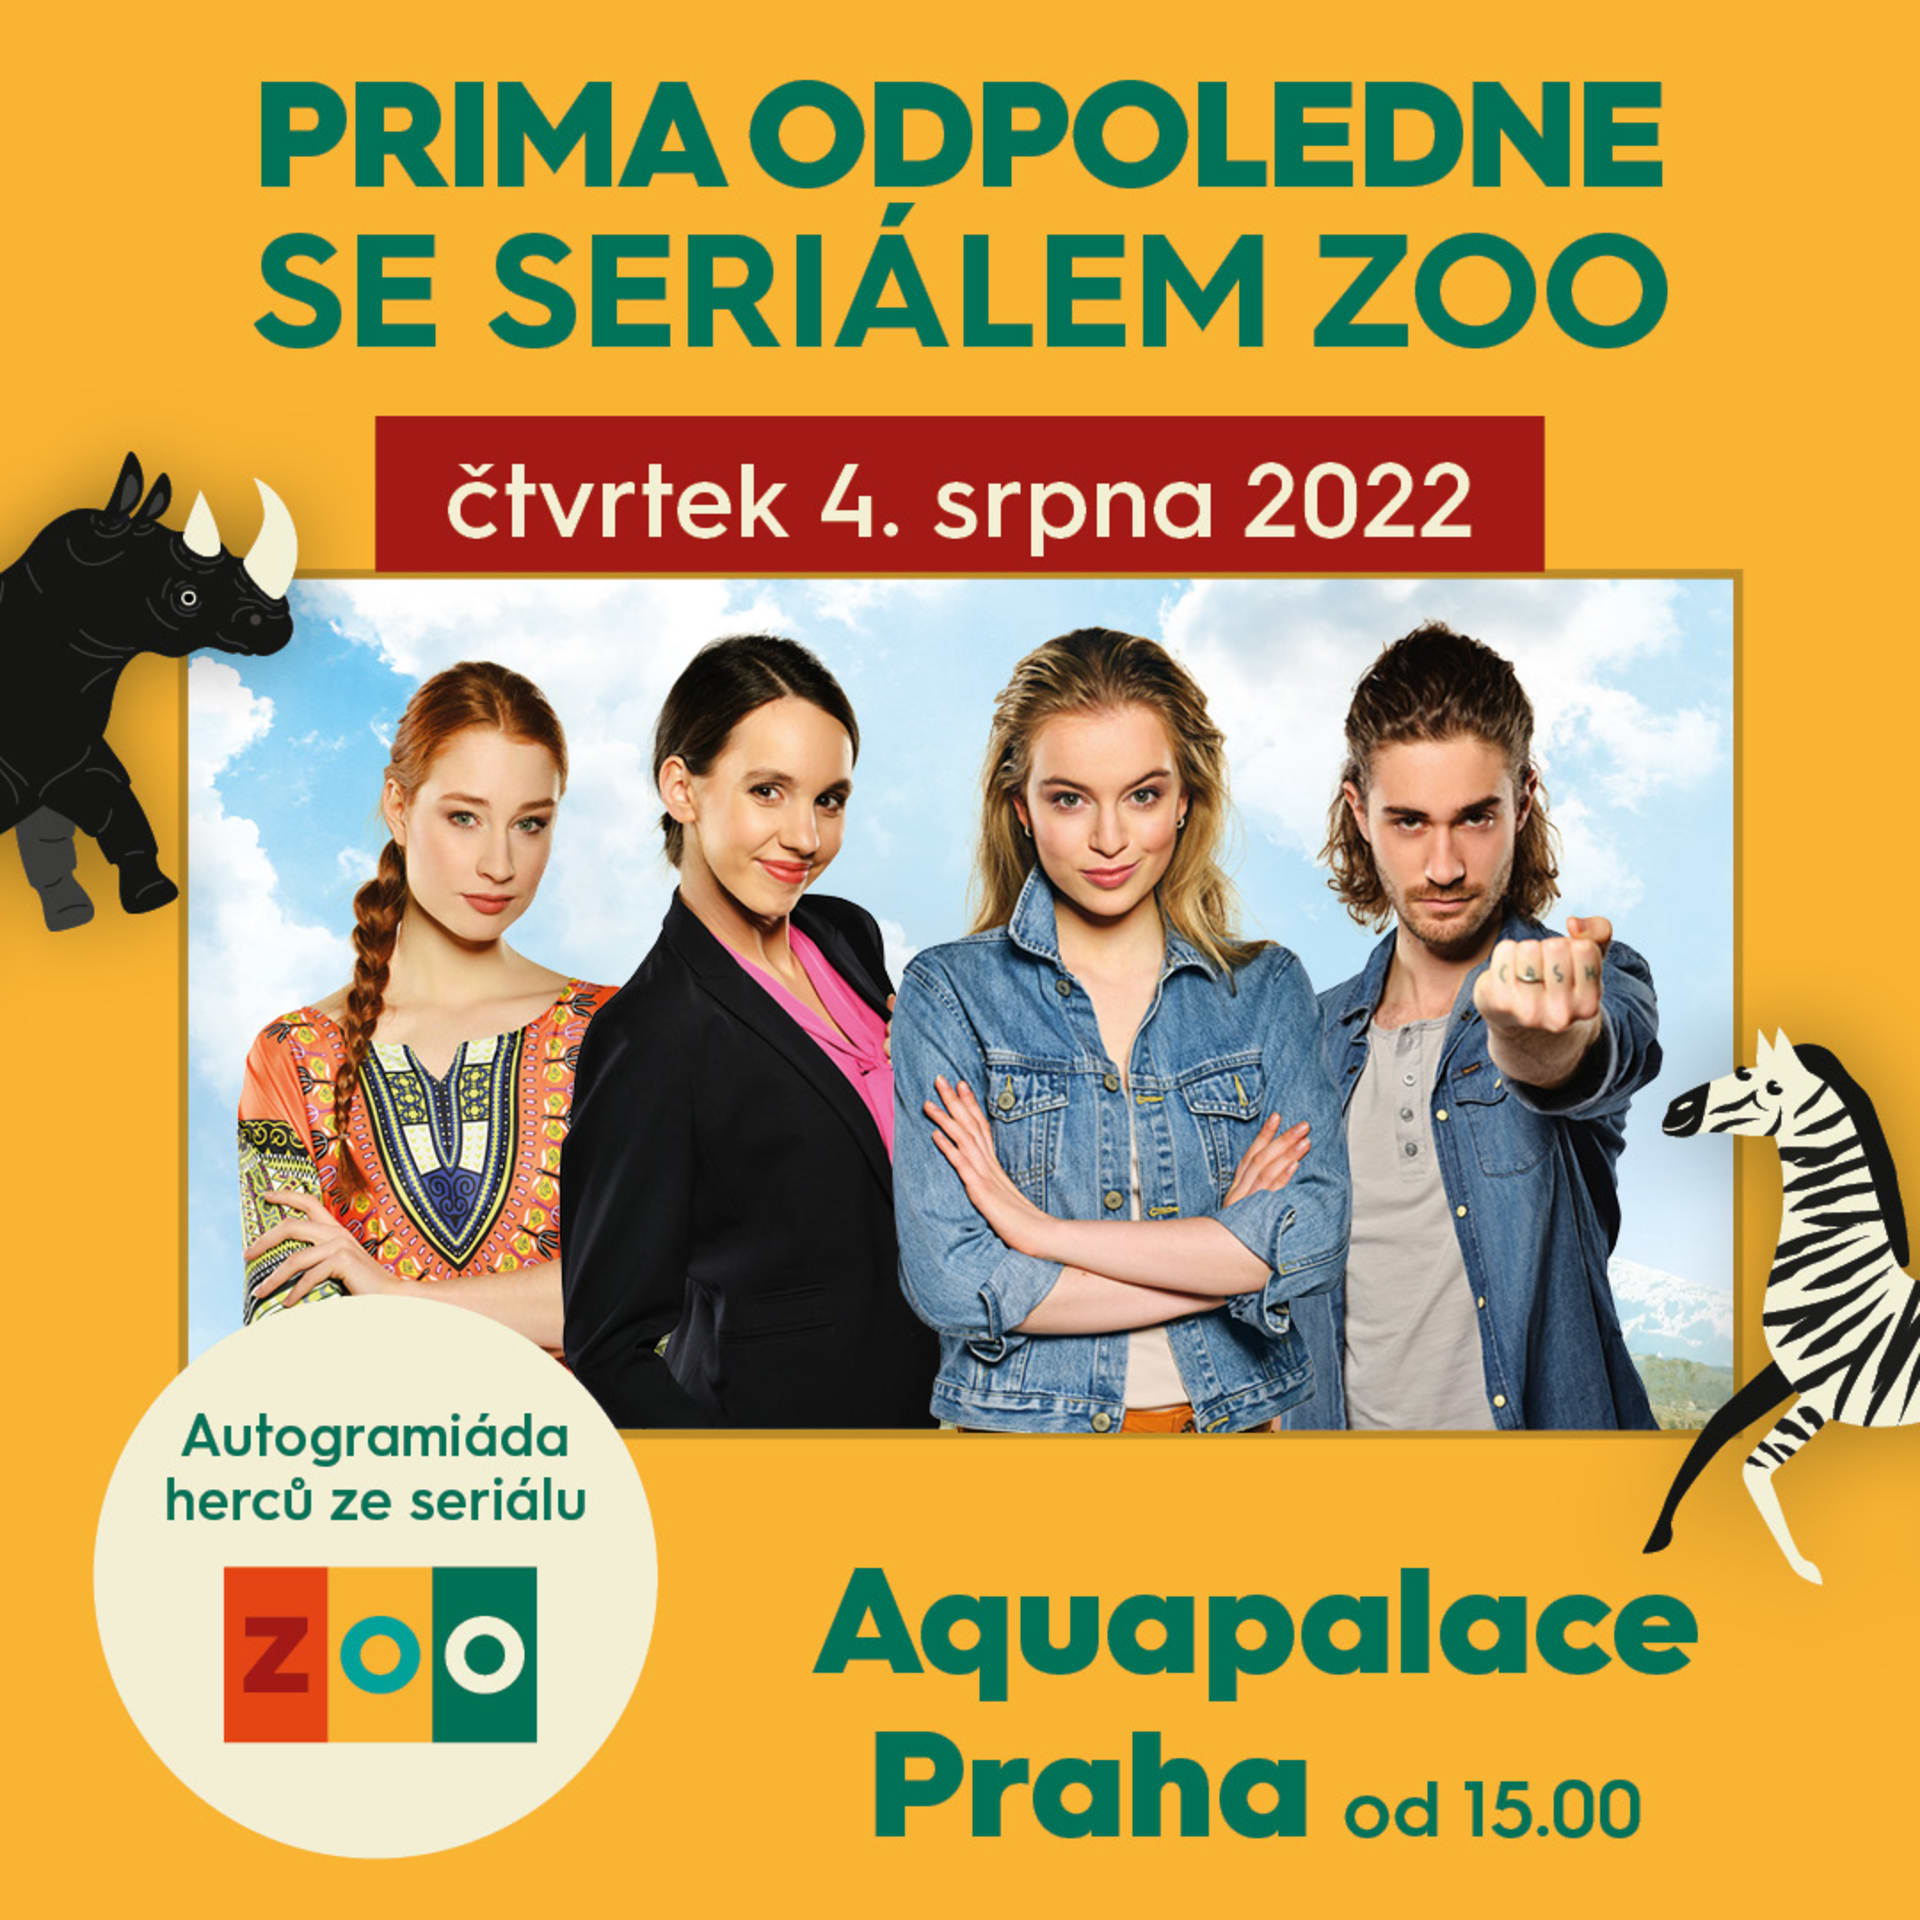 ZOO tour v Aquapalace Praha